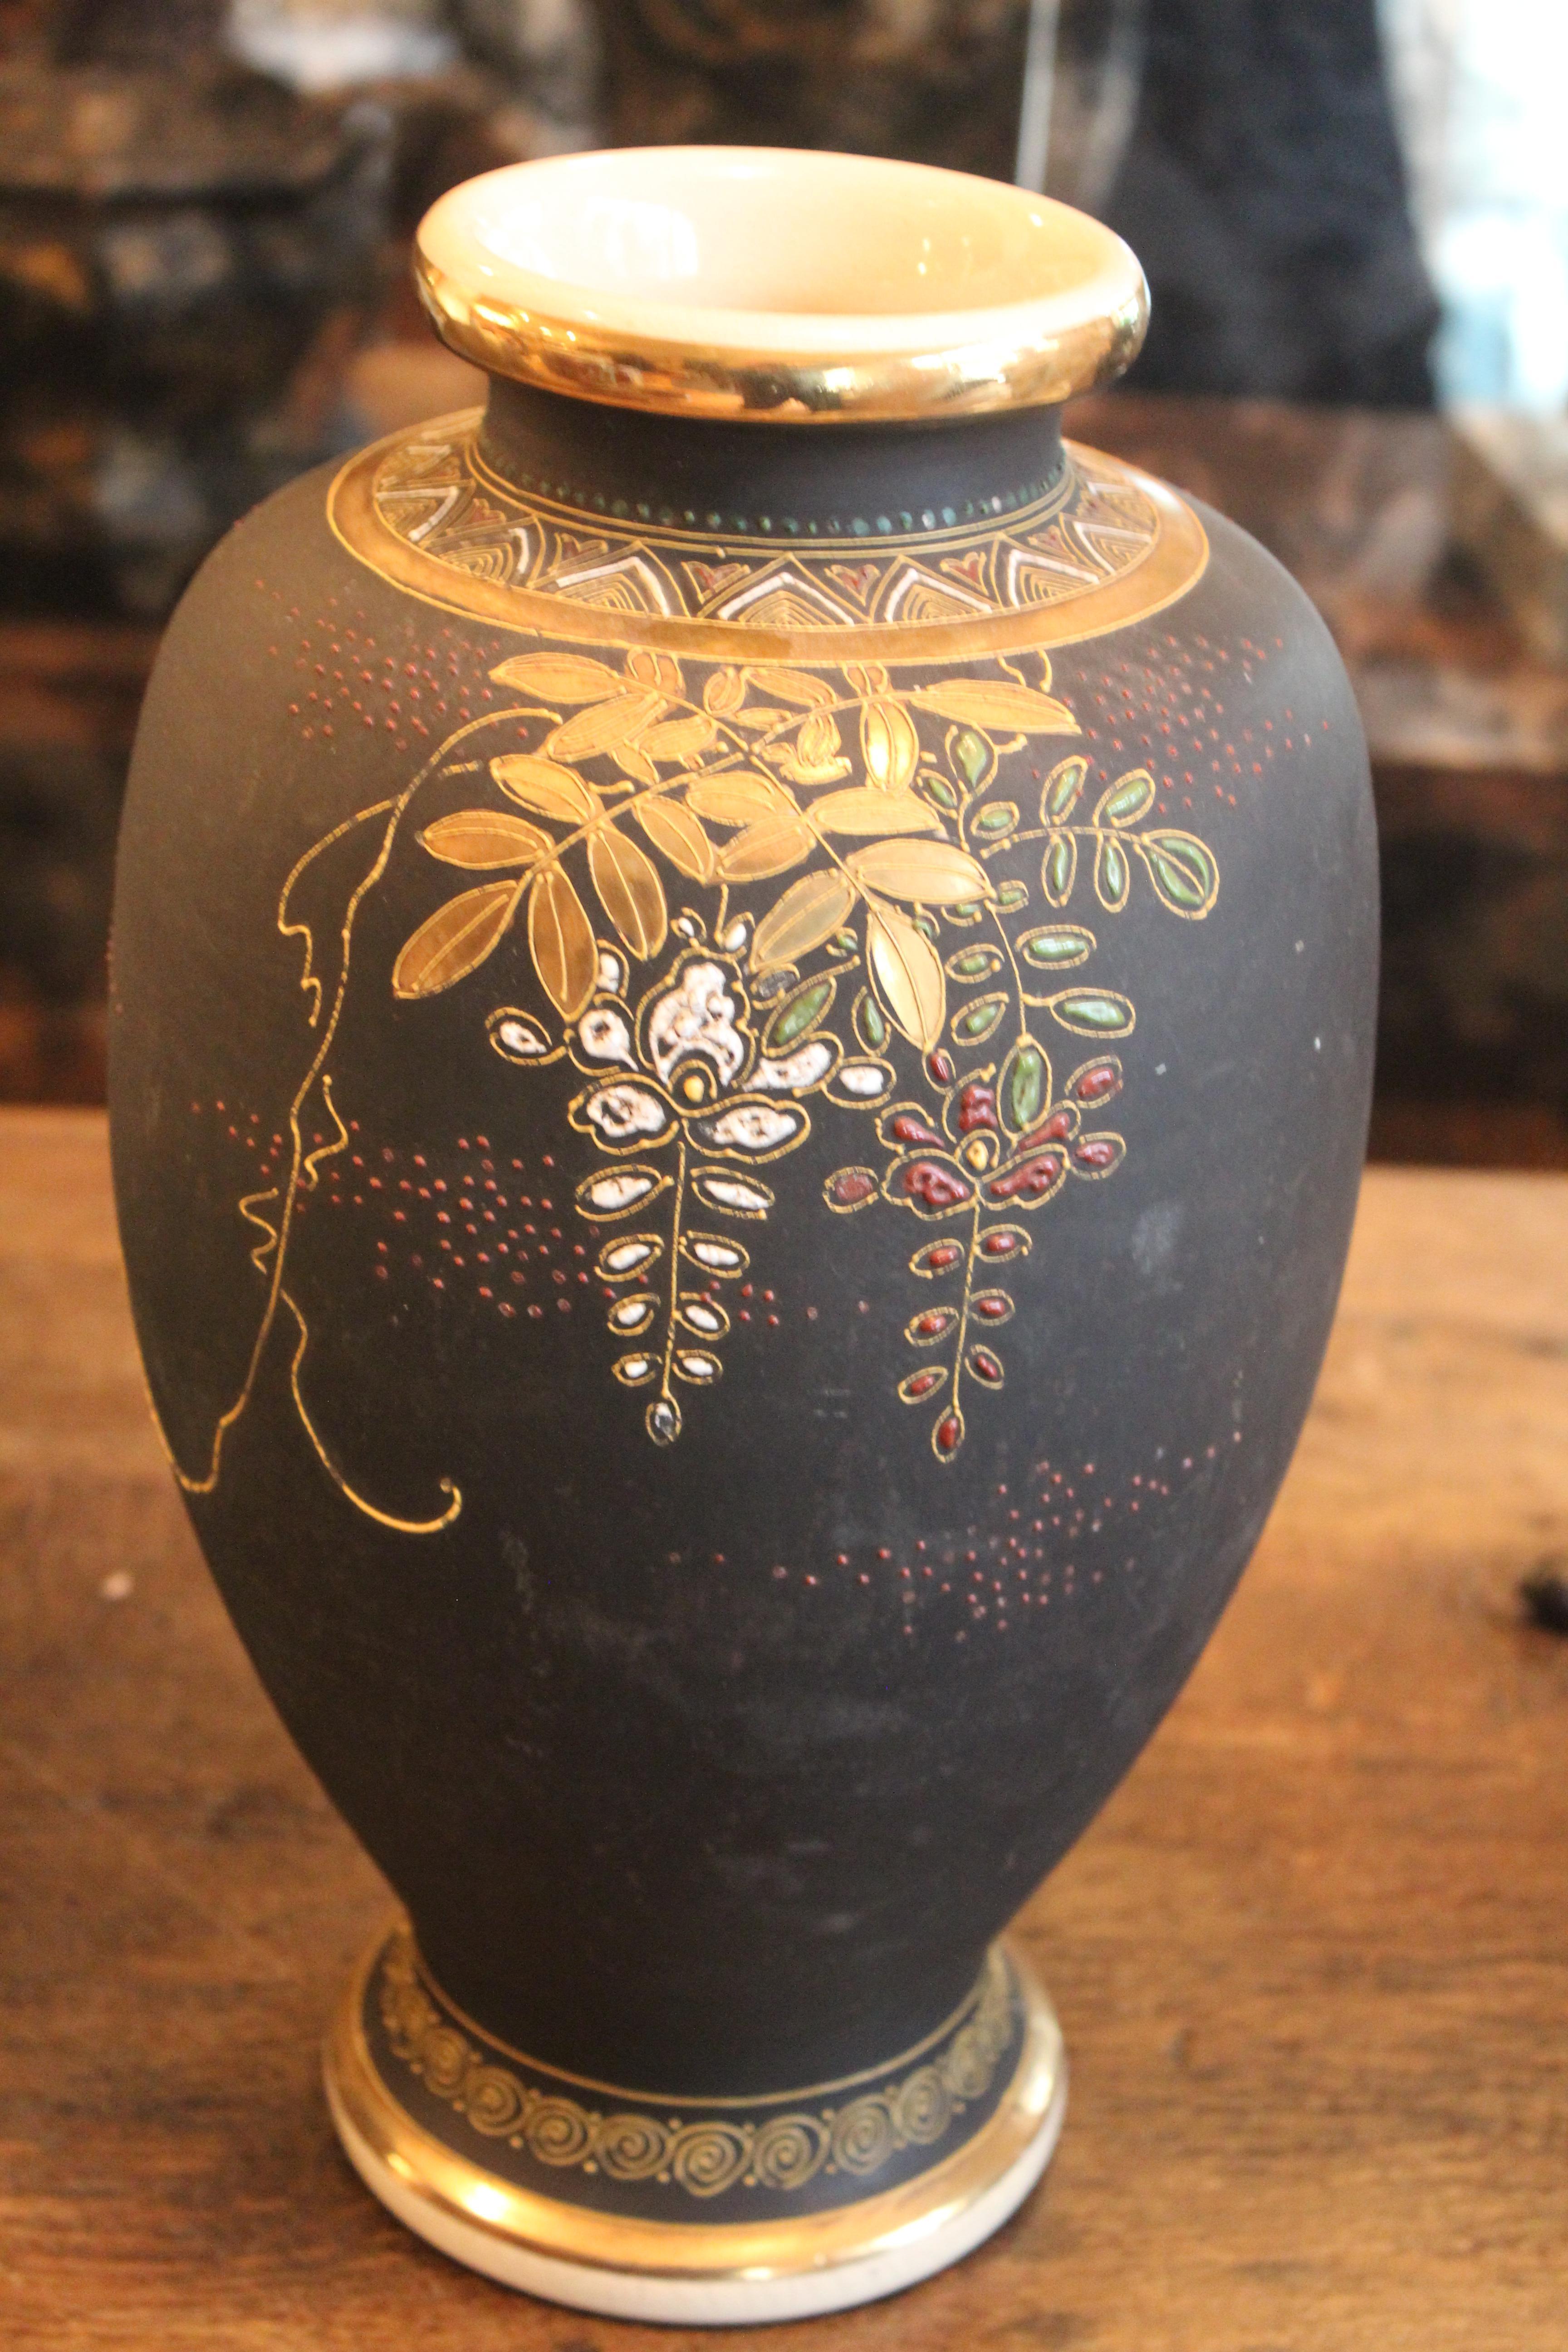 satsuma vases for sale